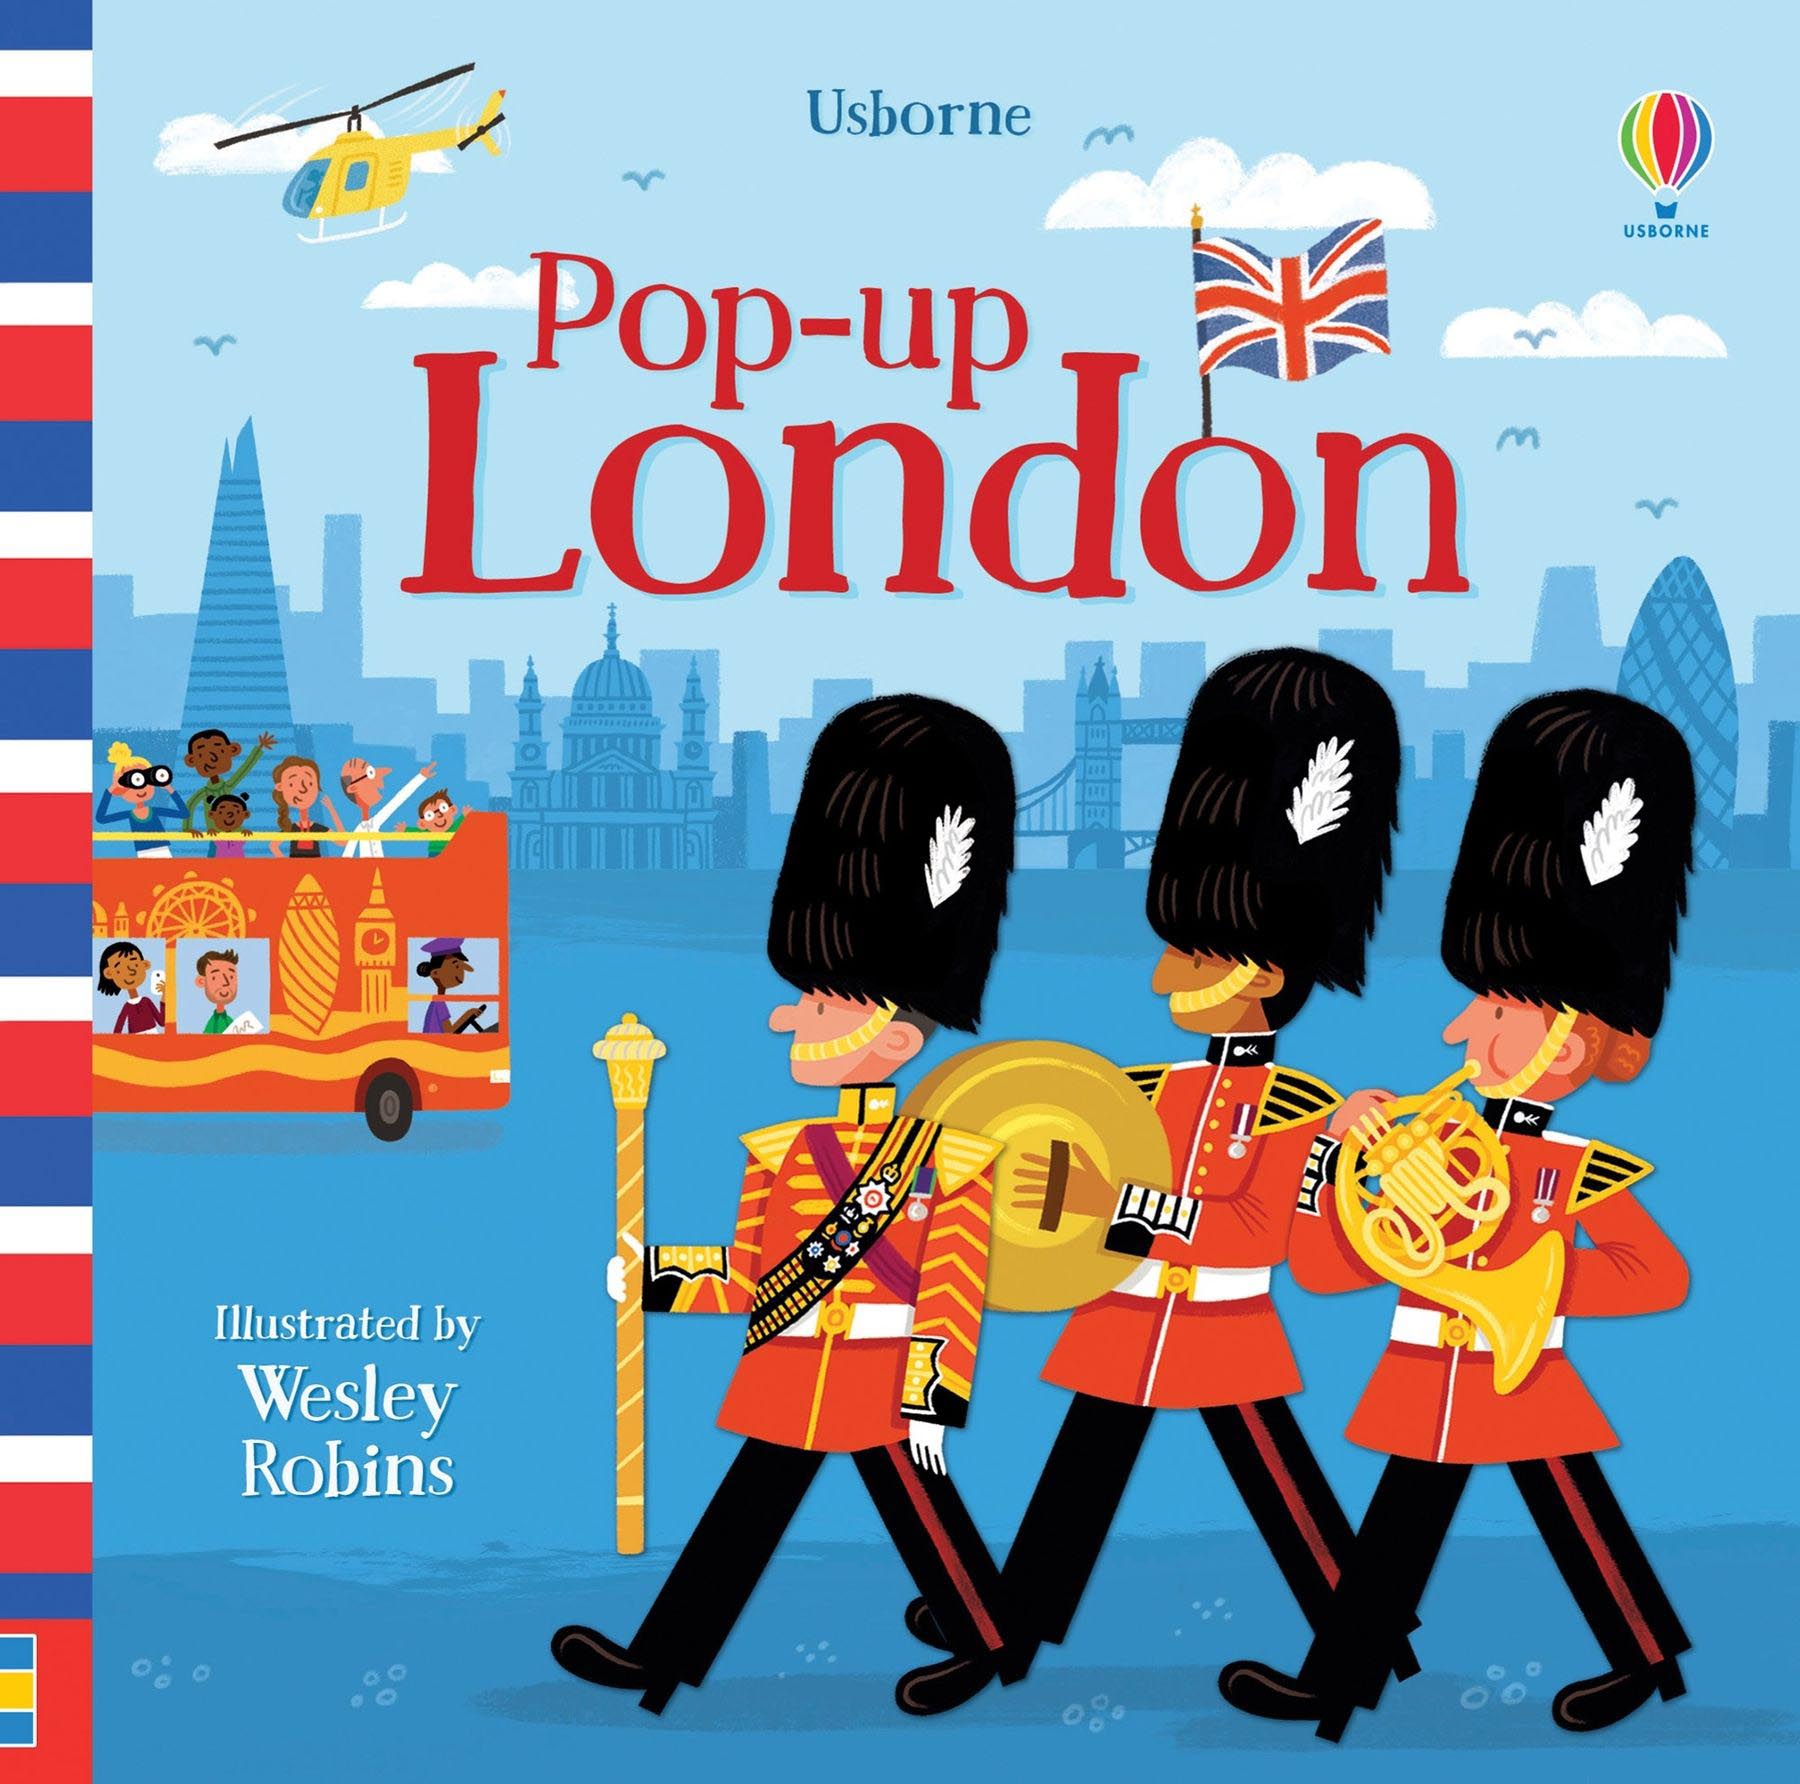 Usborne Pop-up London